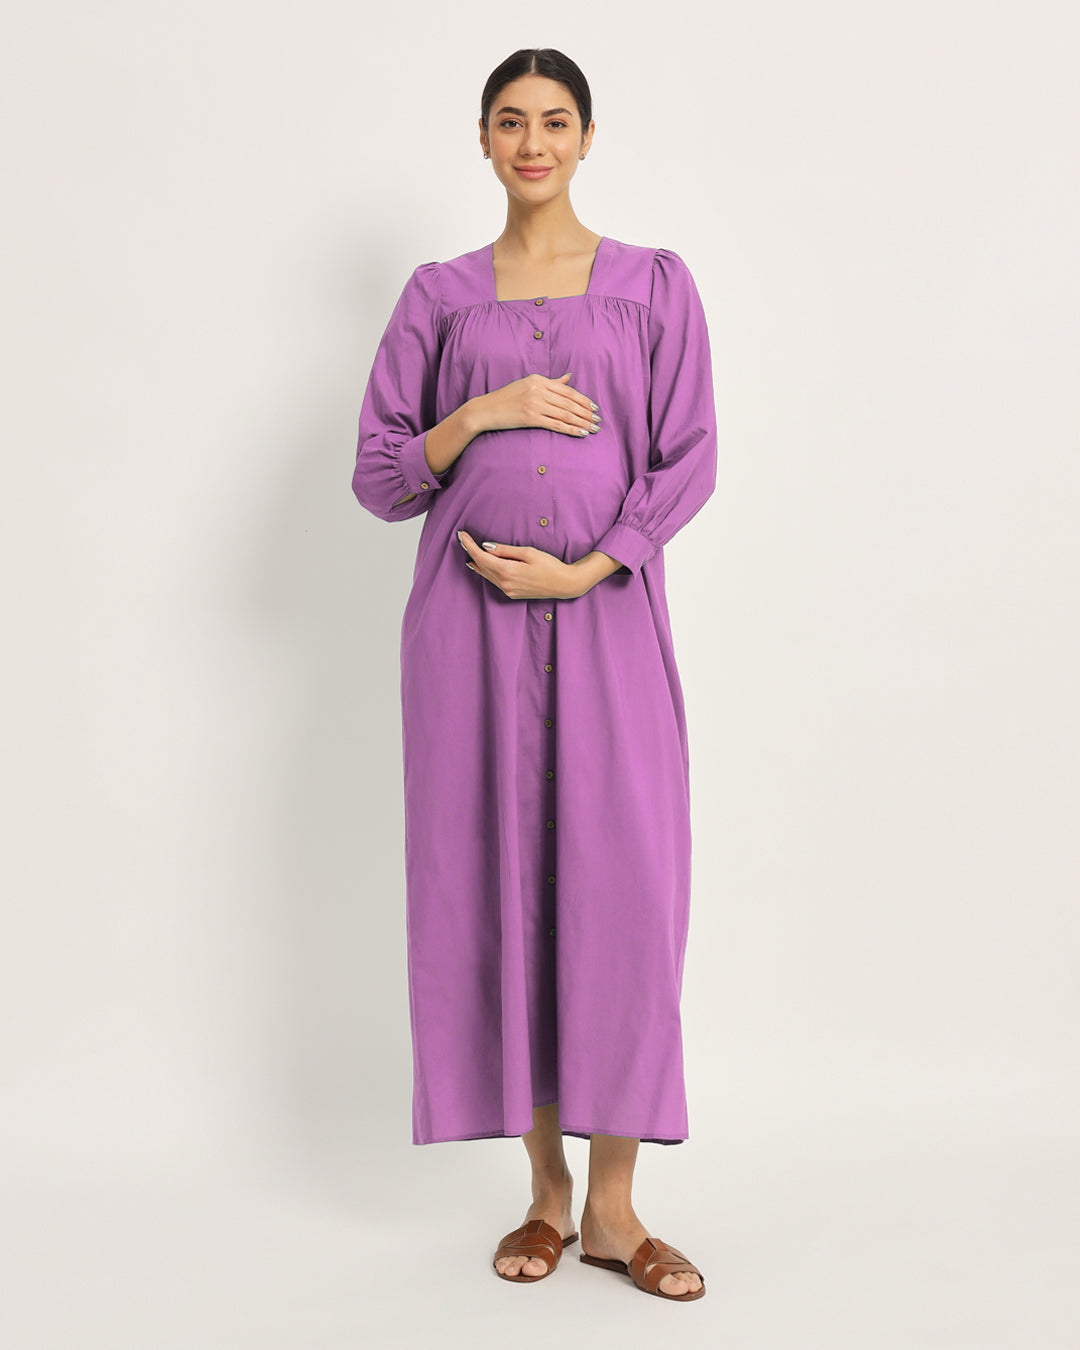 Wisteria Belly Blossom Maternity & Nursing Dress